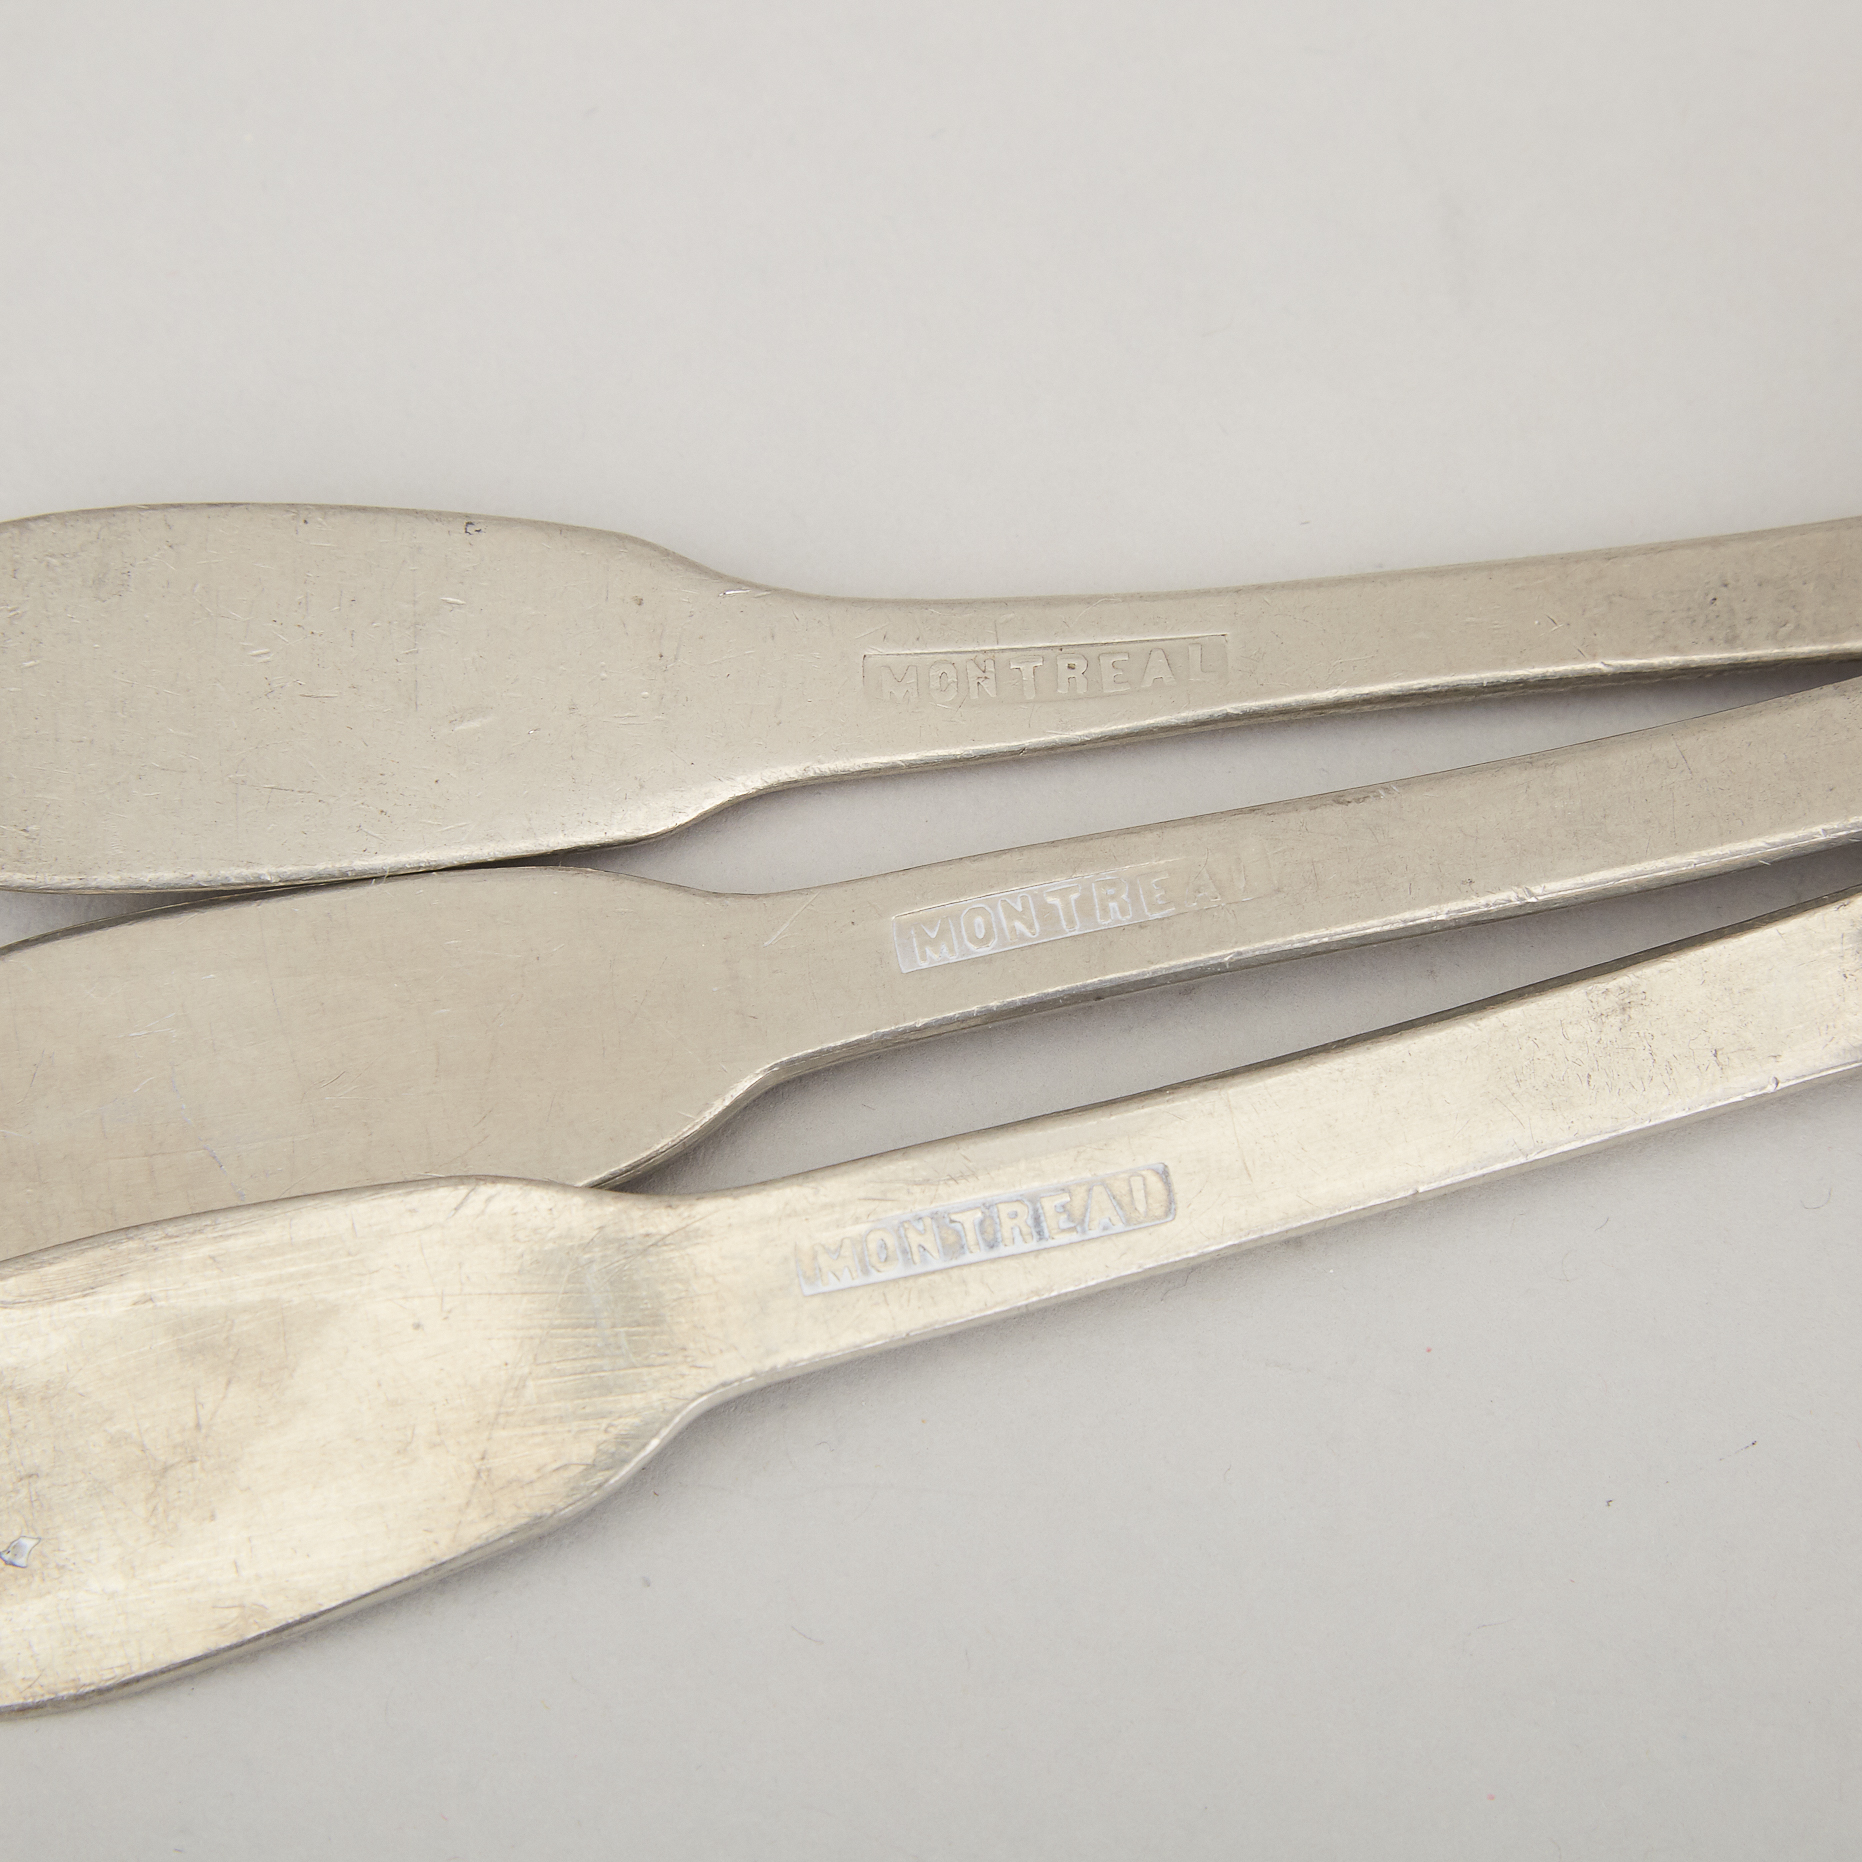 Three Canadian Pewter Table Spoons, Thomas Menut, Montreal, 19th century